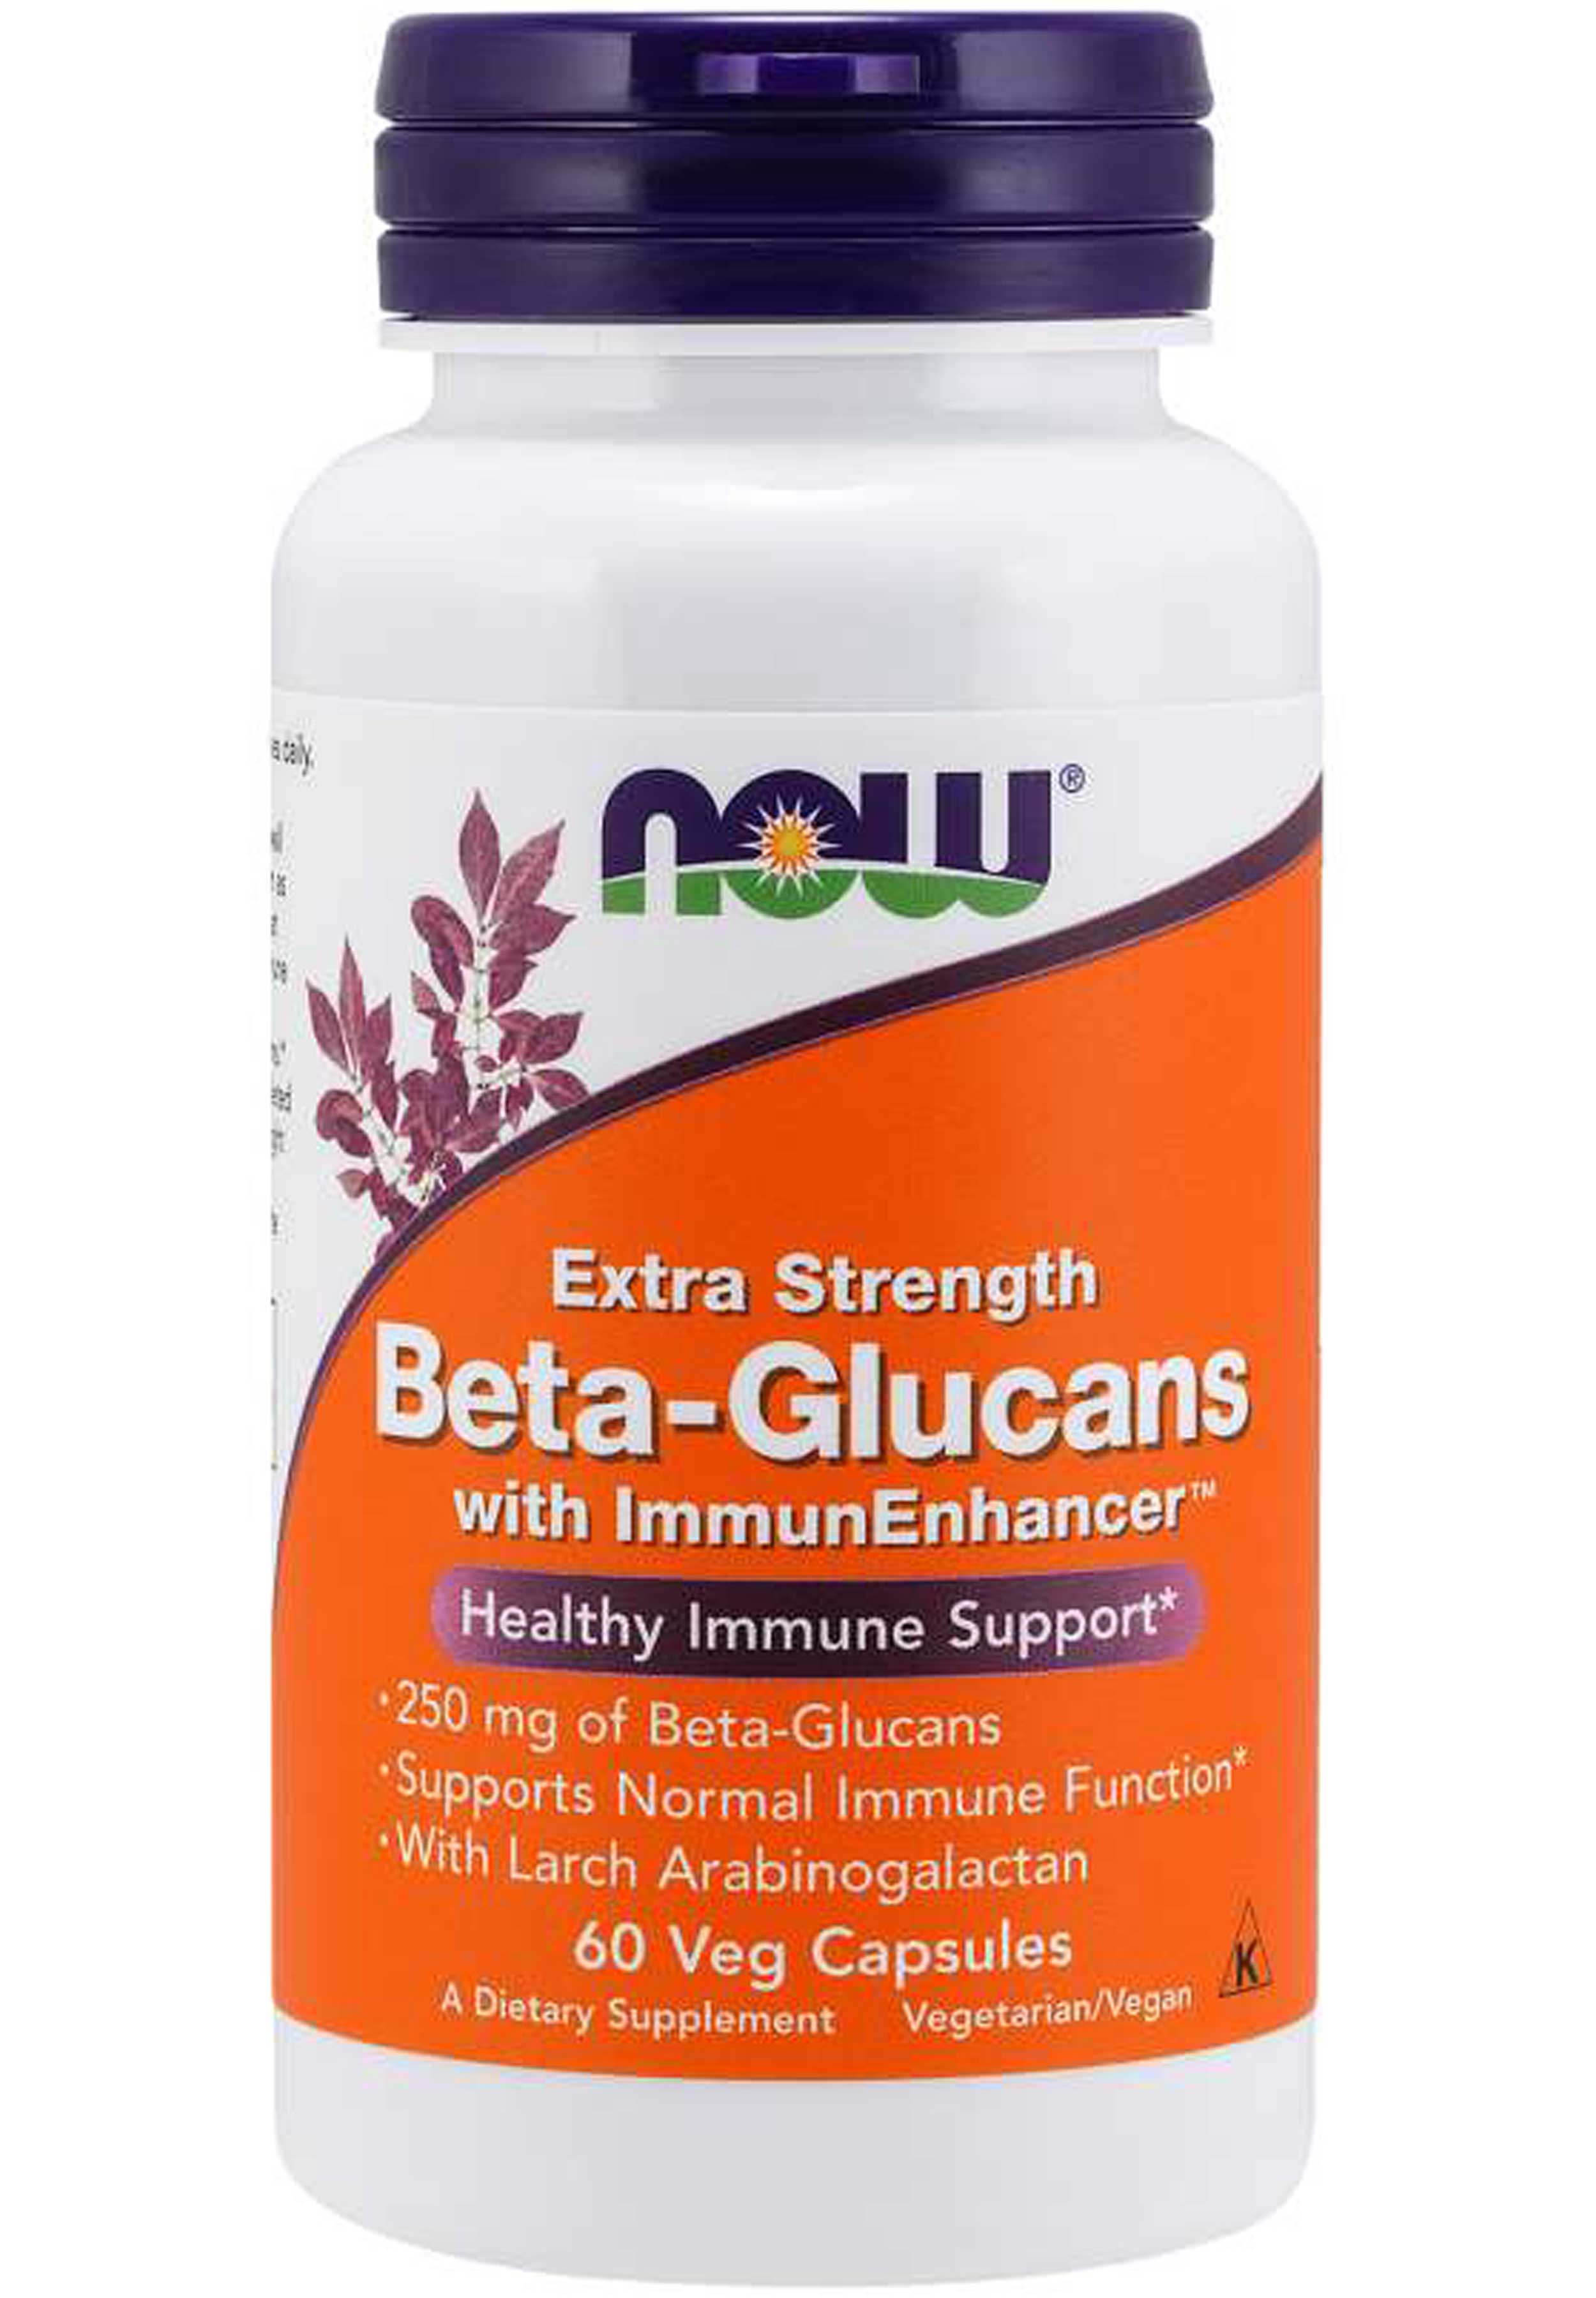 NOW Extra Strength Beta-Glucans with ImmunEnhancer